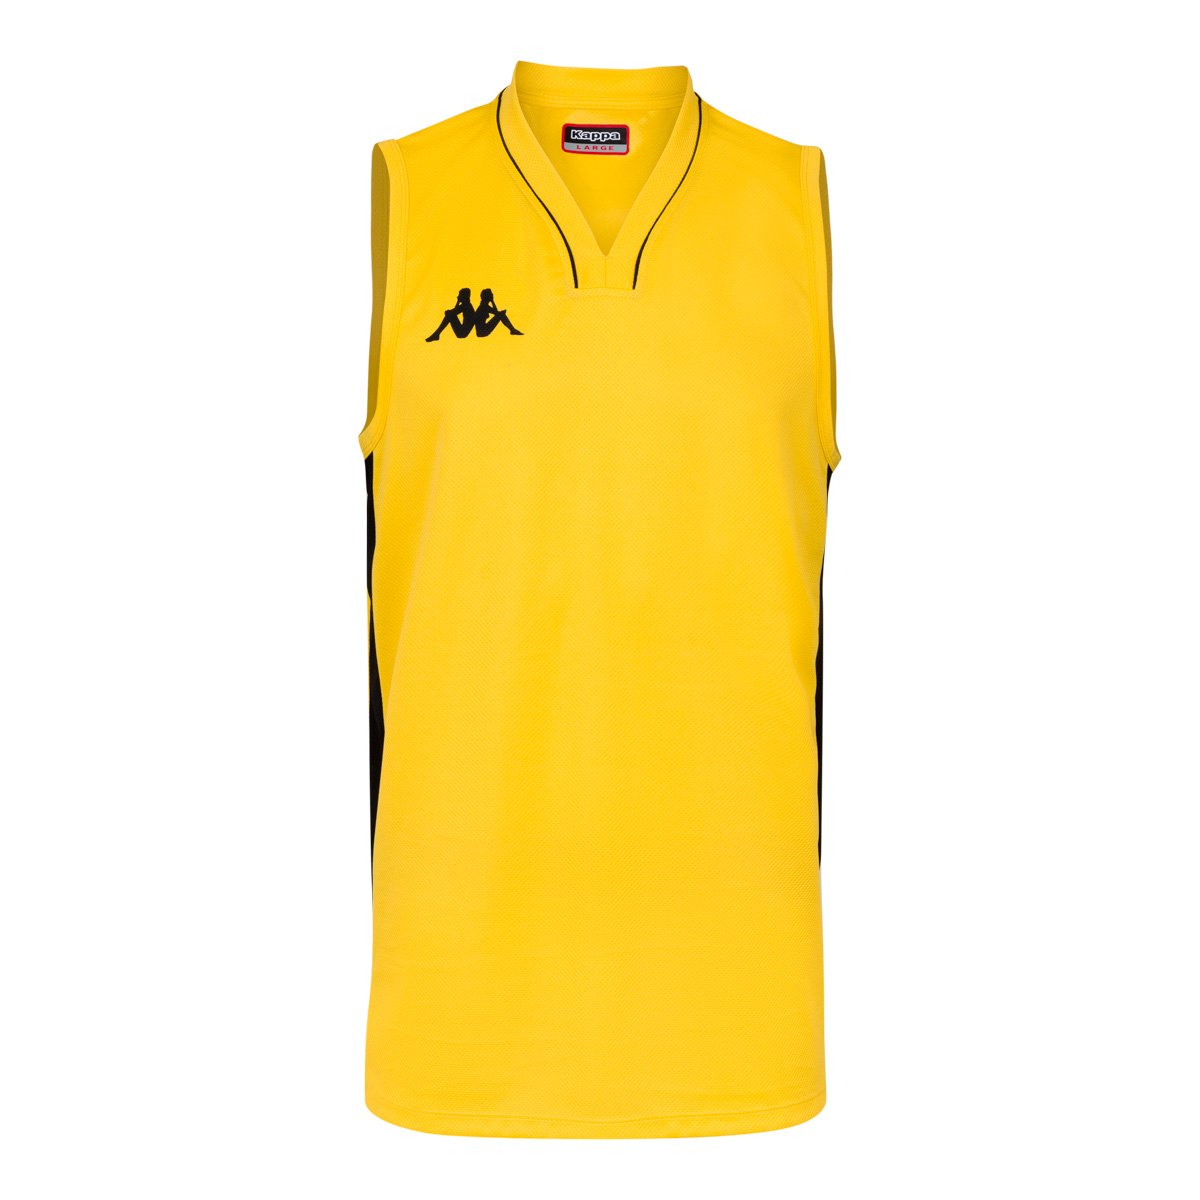 Camiseta de juego Basket Cairo Amarillo Hombre - Imagen 1